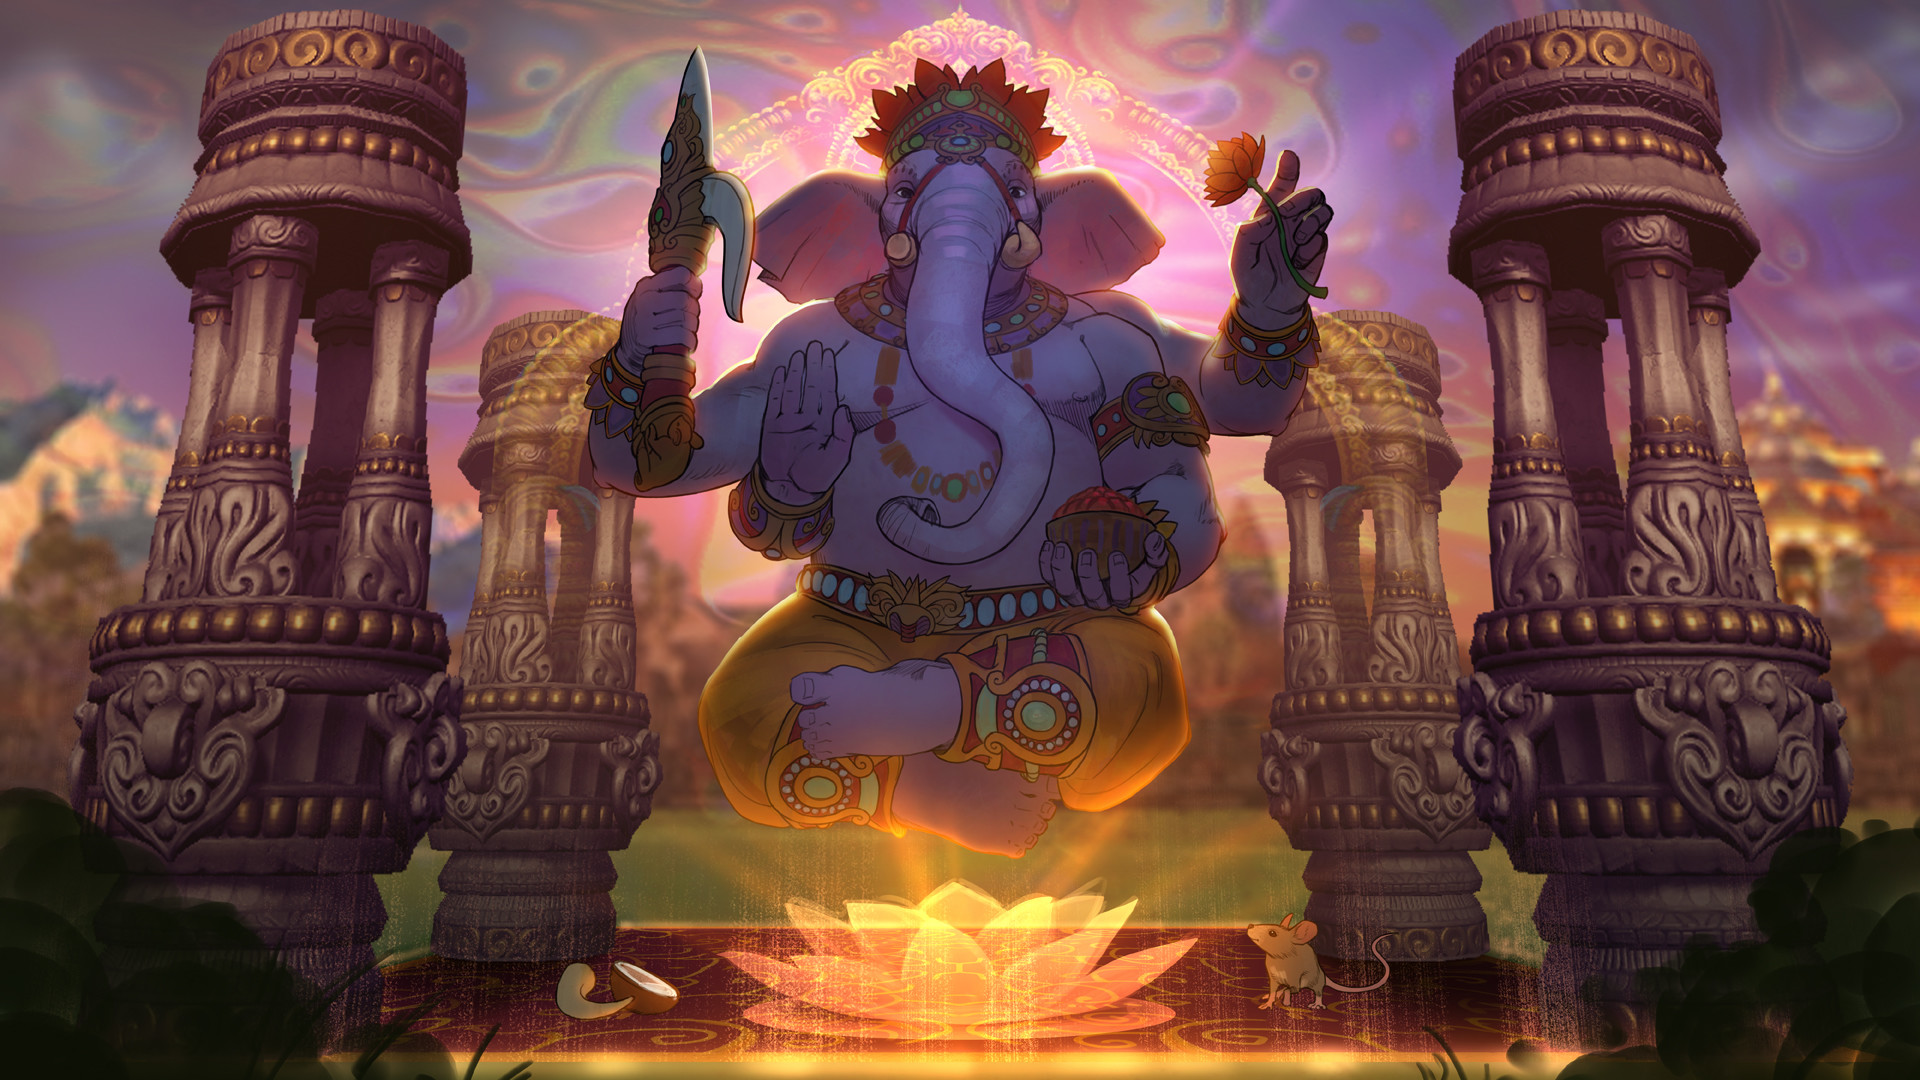 Ganesha by Jon Neimeister.